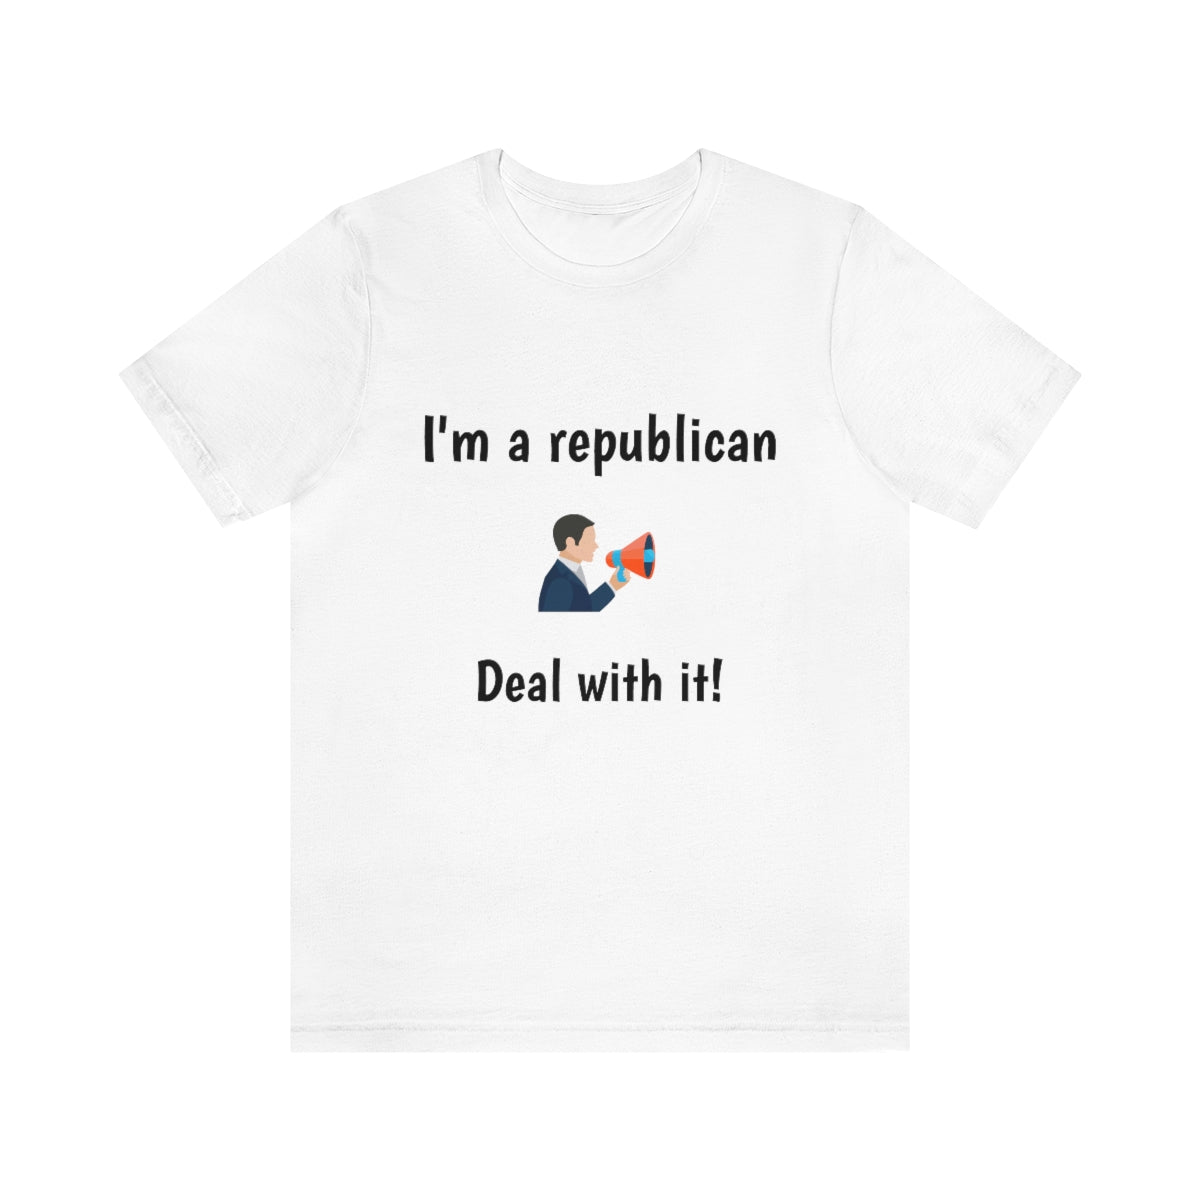 I'm a Republican - Funny Unisex Short Sleeve Tee